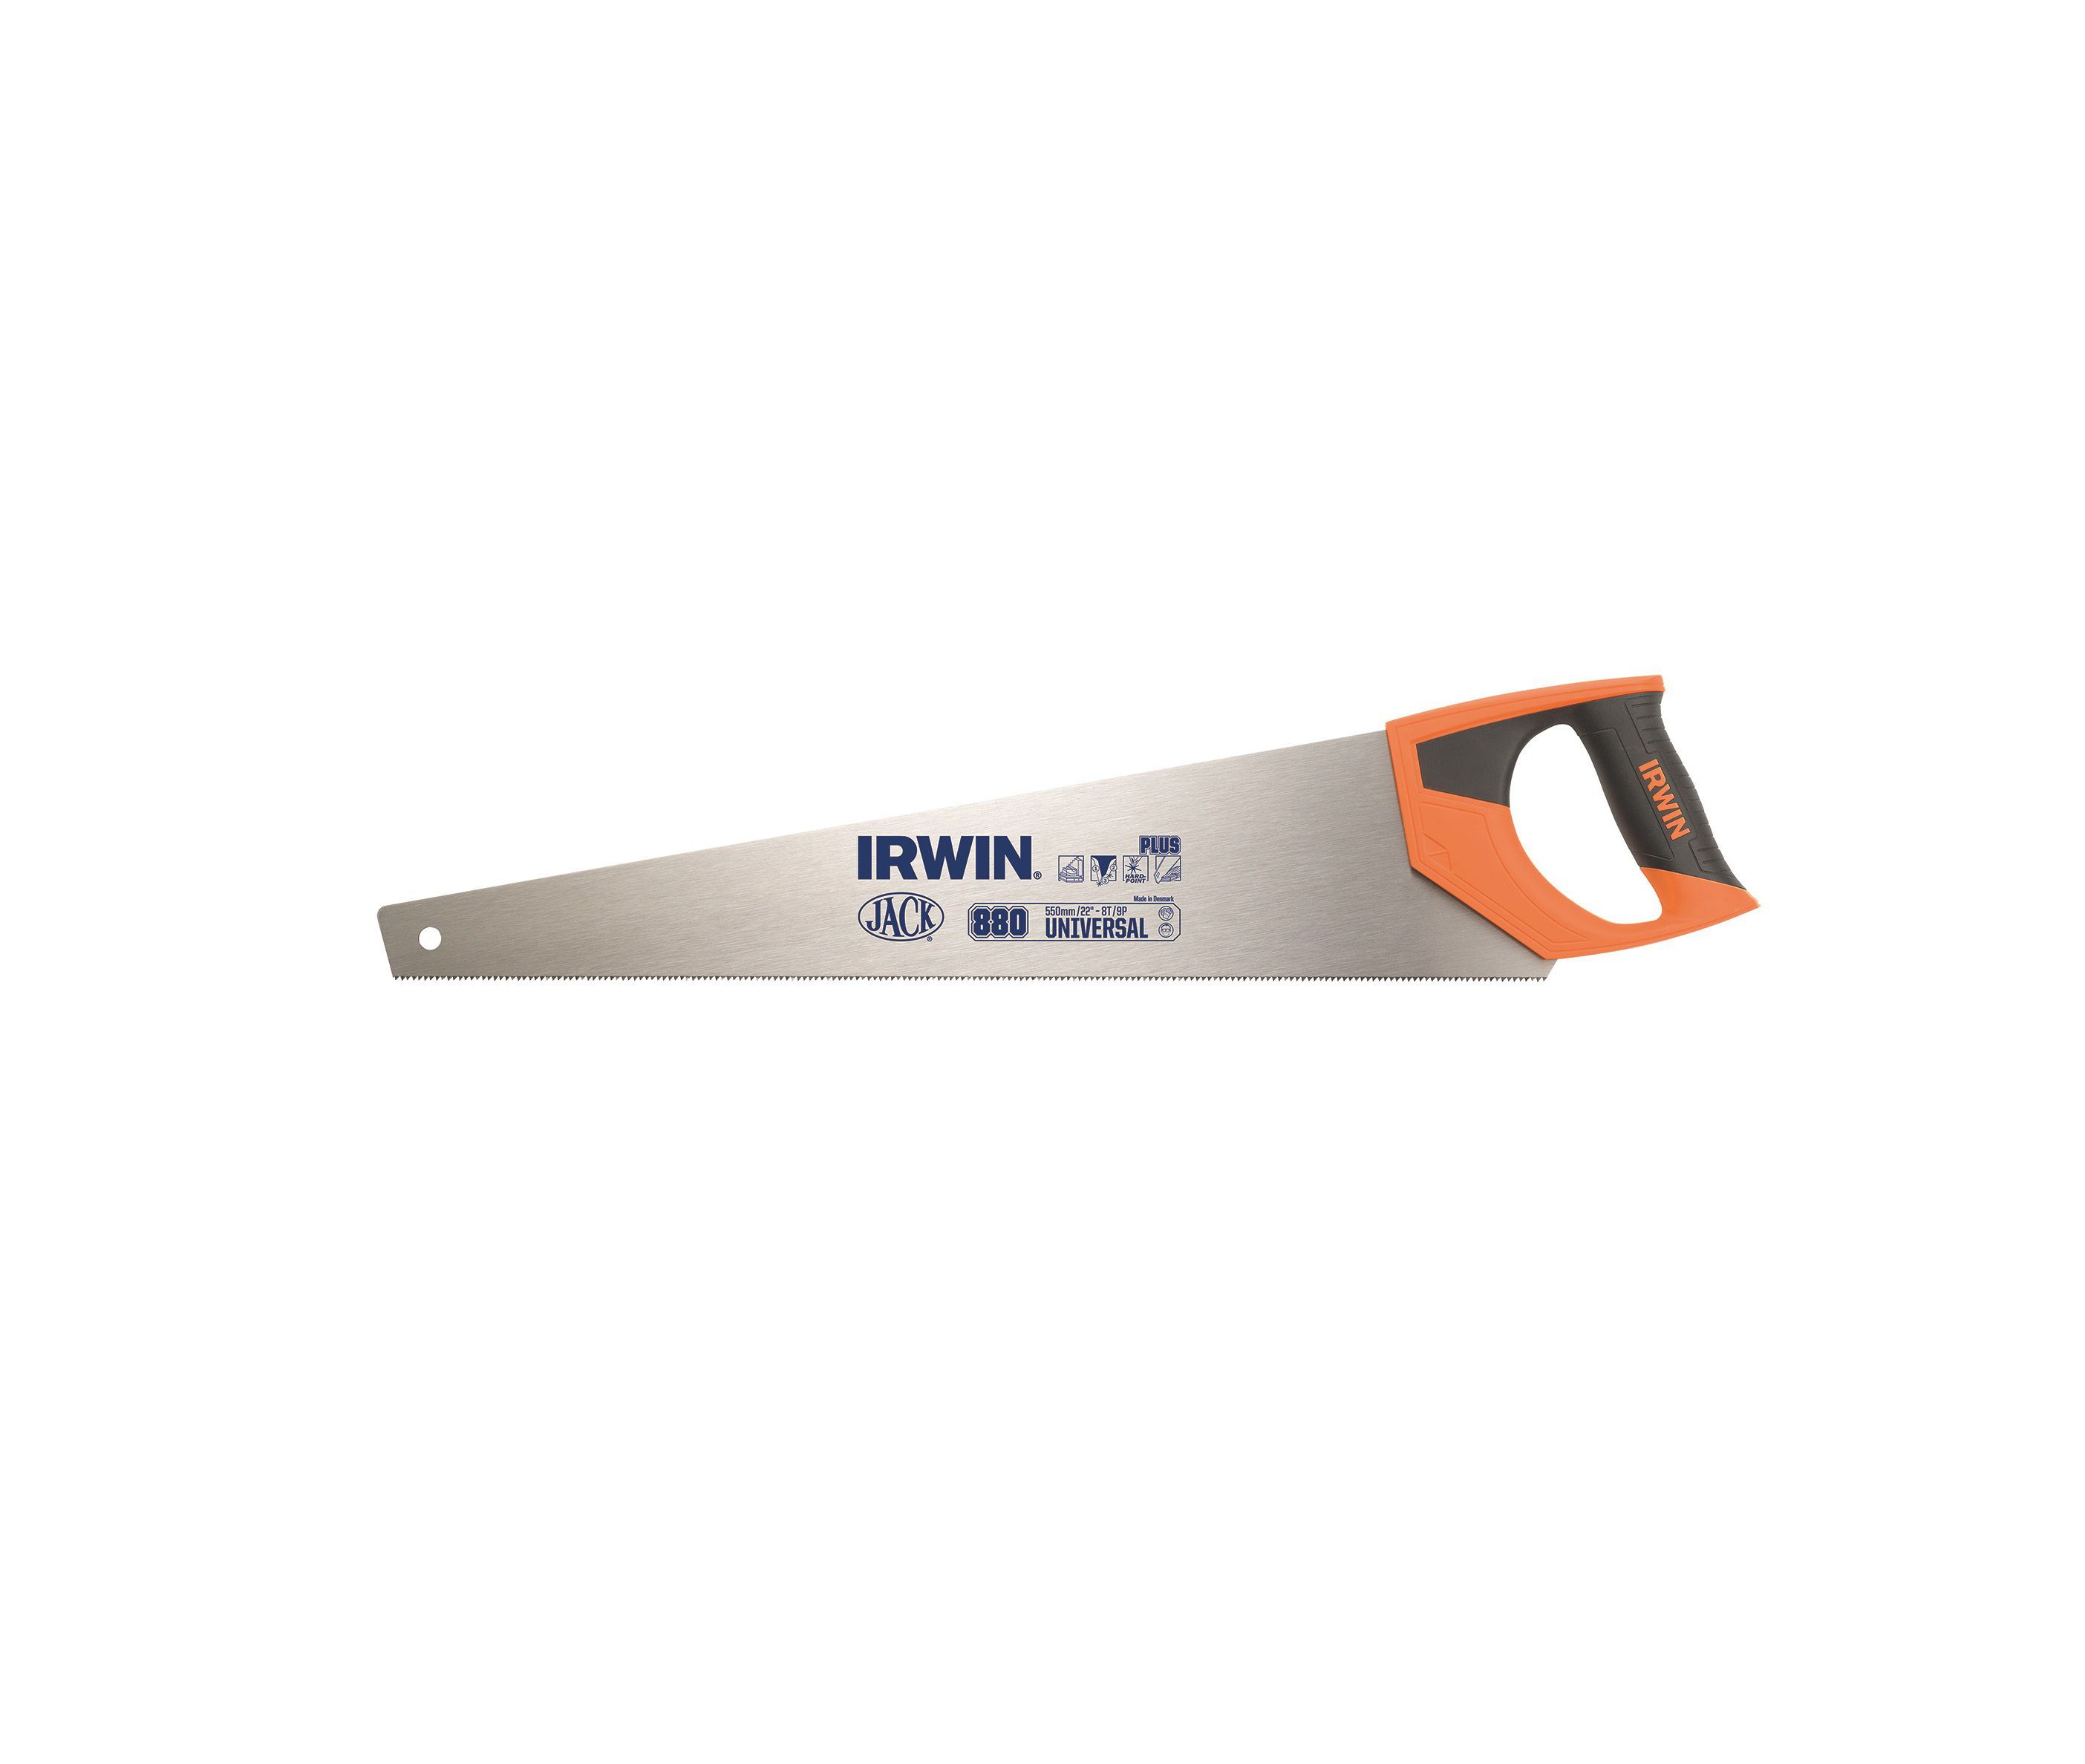 Irwin 550mm Universal saw, 8 TPI